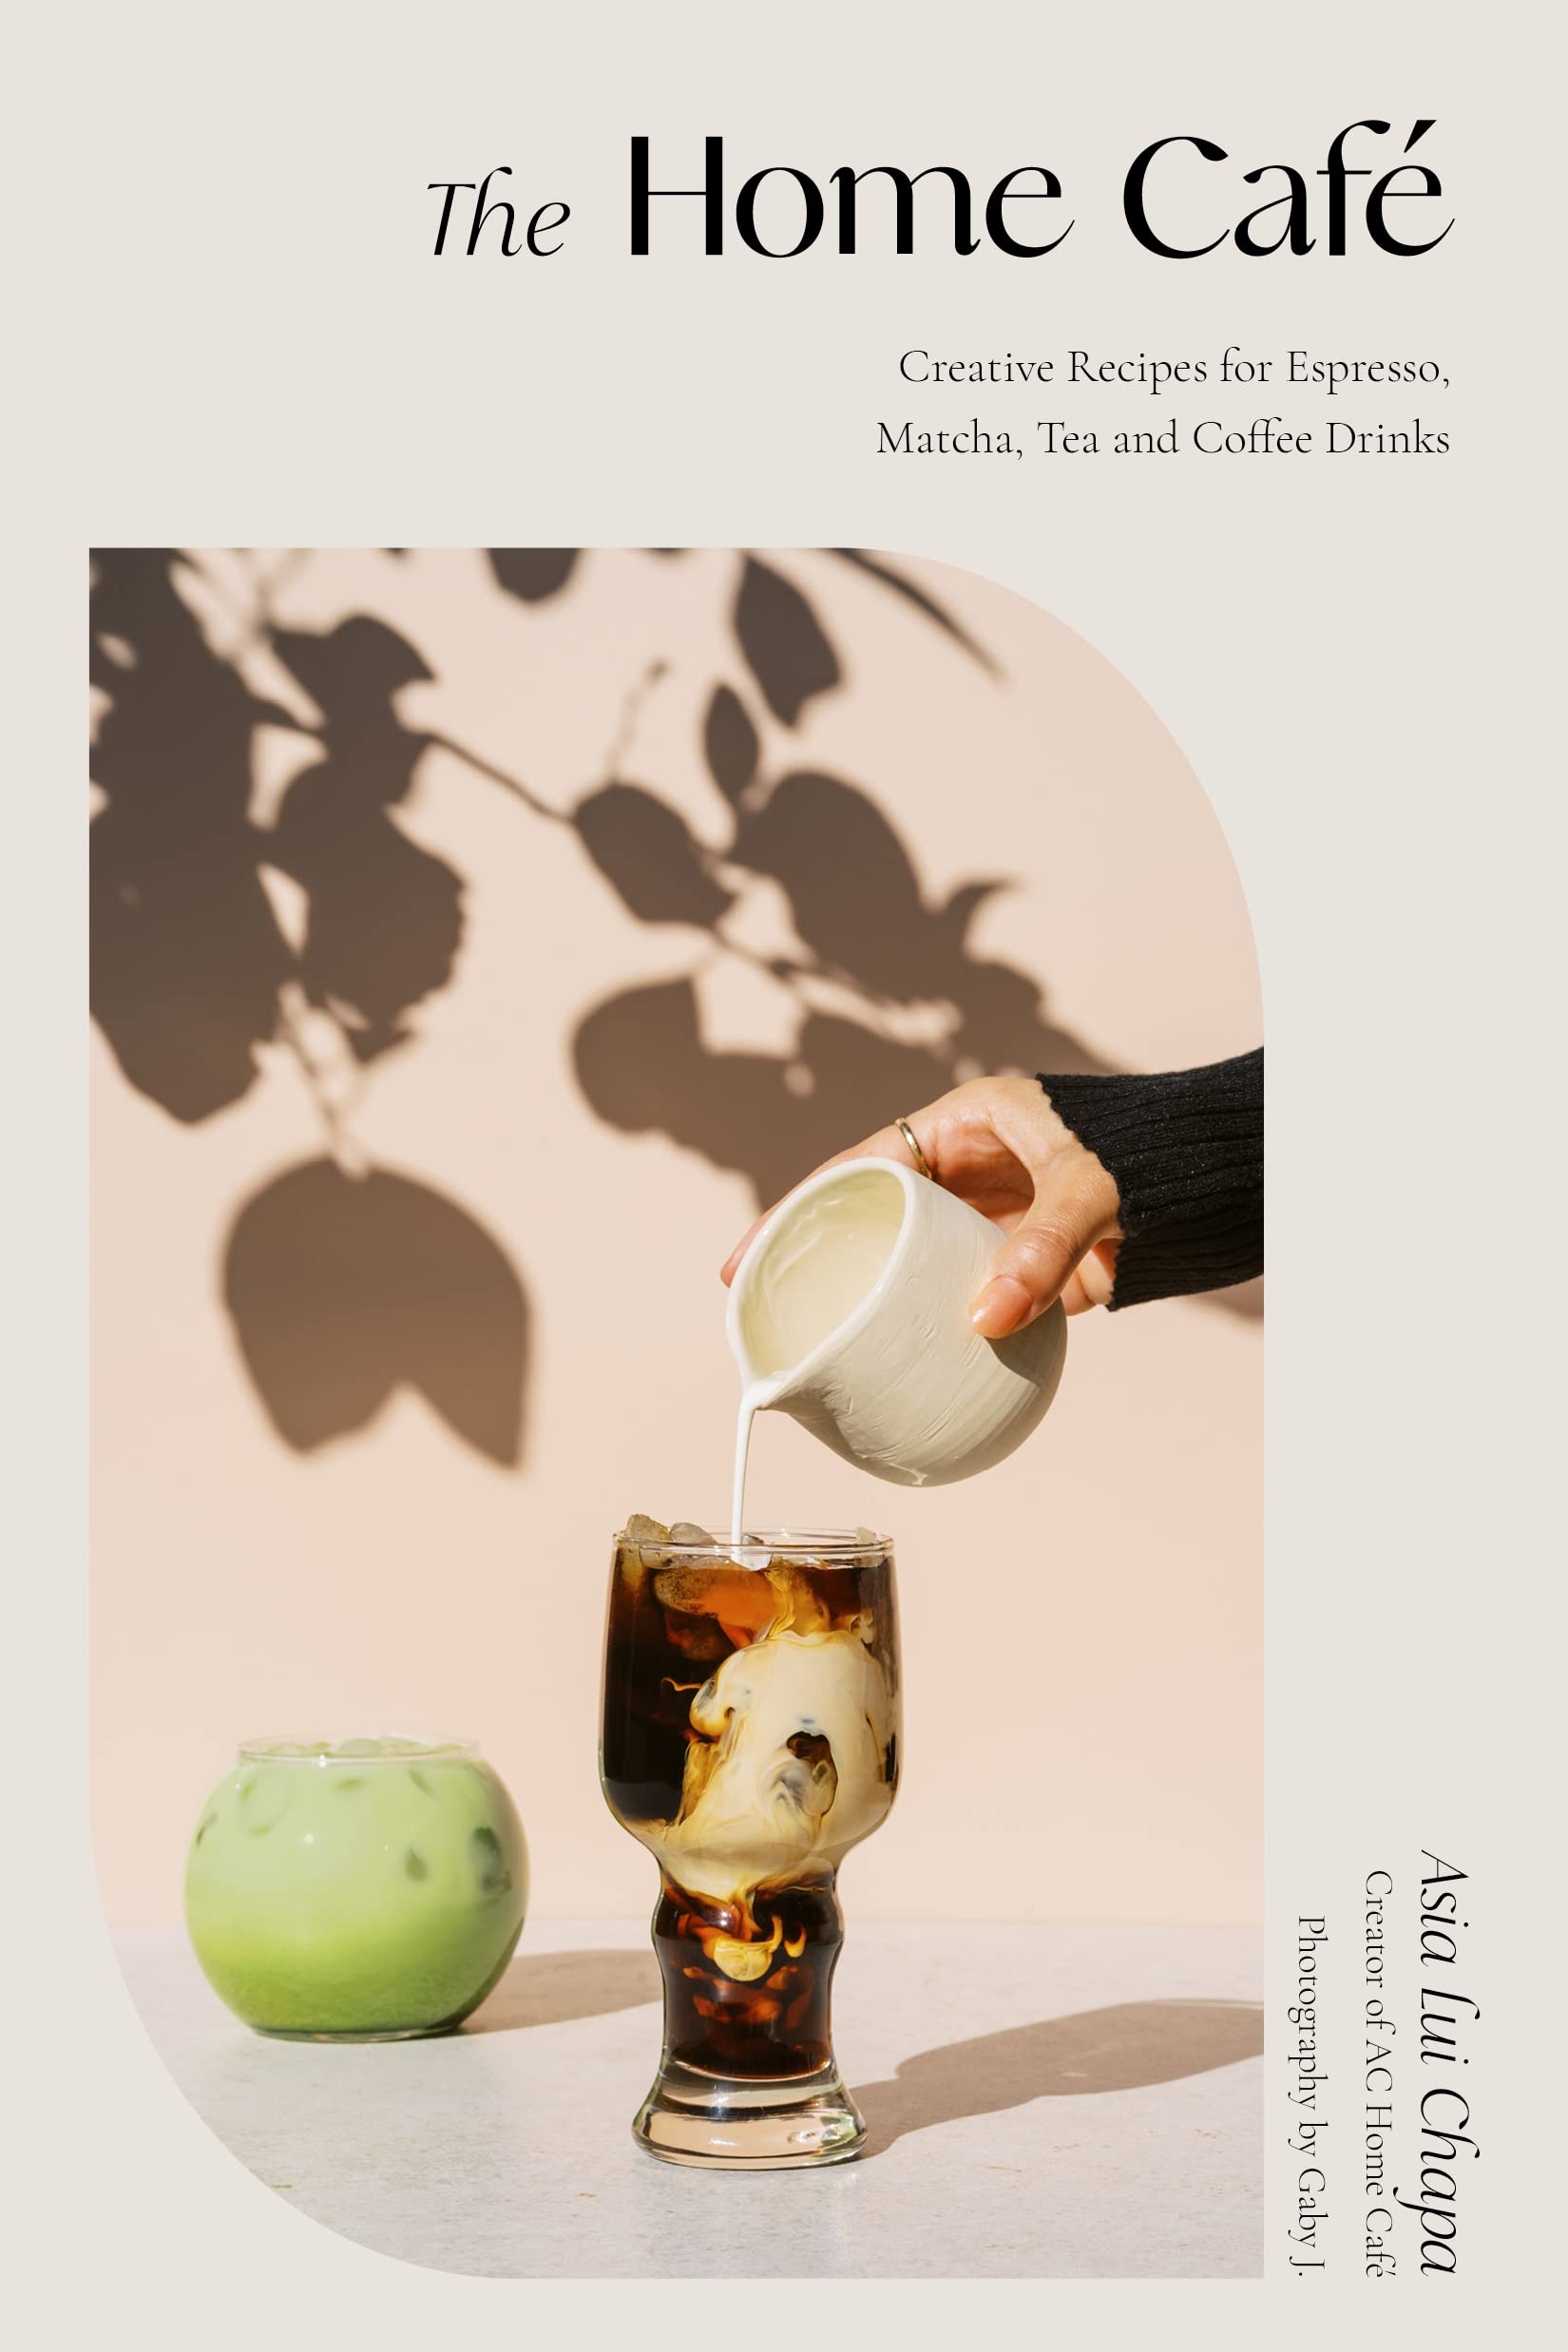 The Home Café: Creative Recipes for Espresso, Matcha, Tea and Coffee Drinks (Asia Lui Chapa)